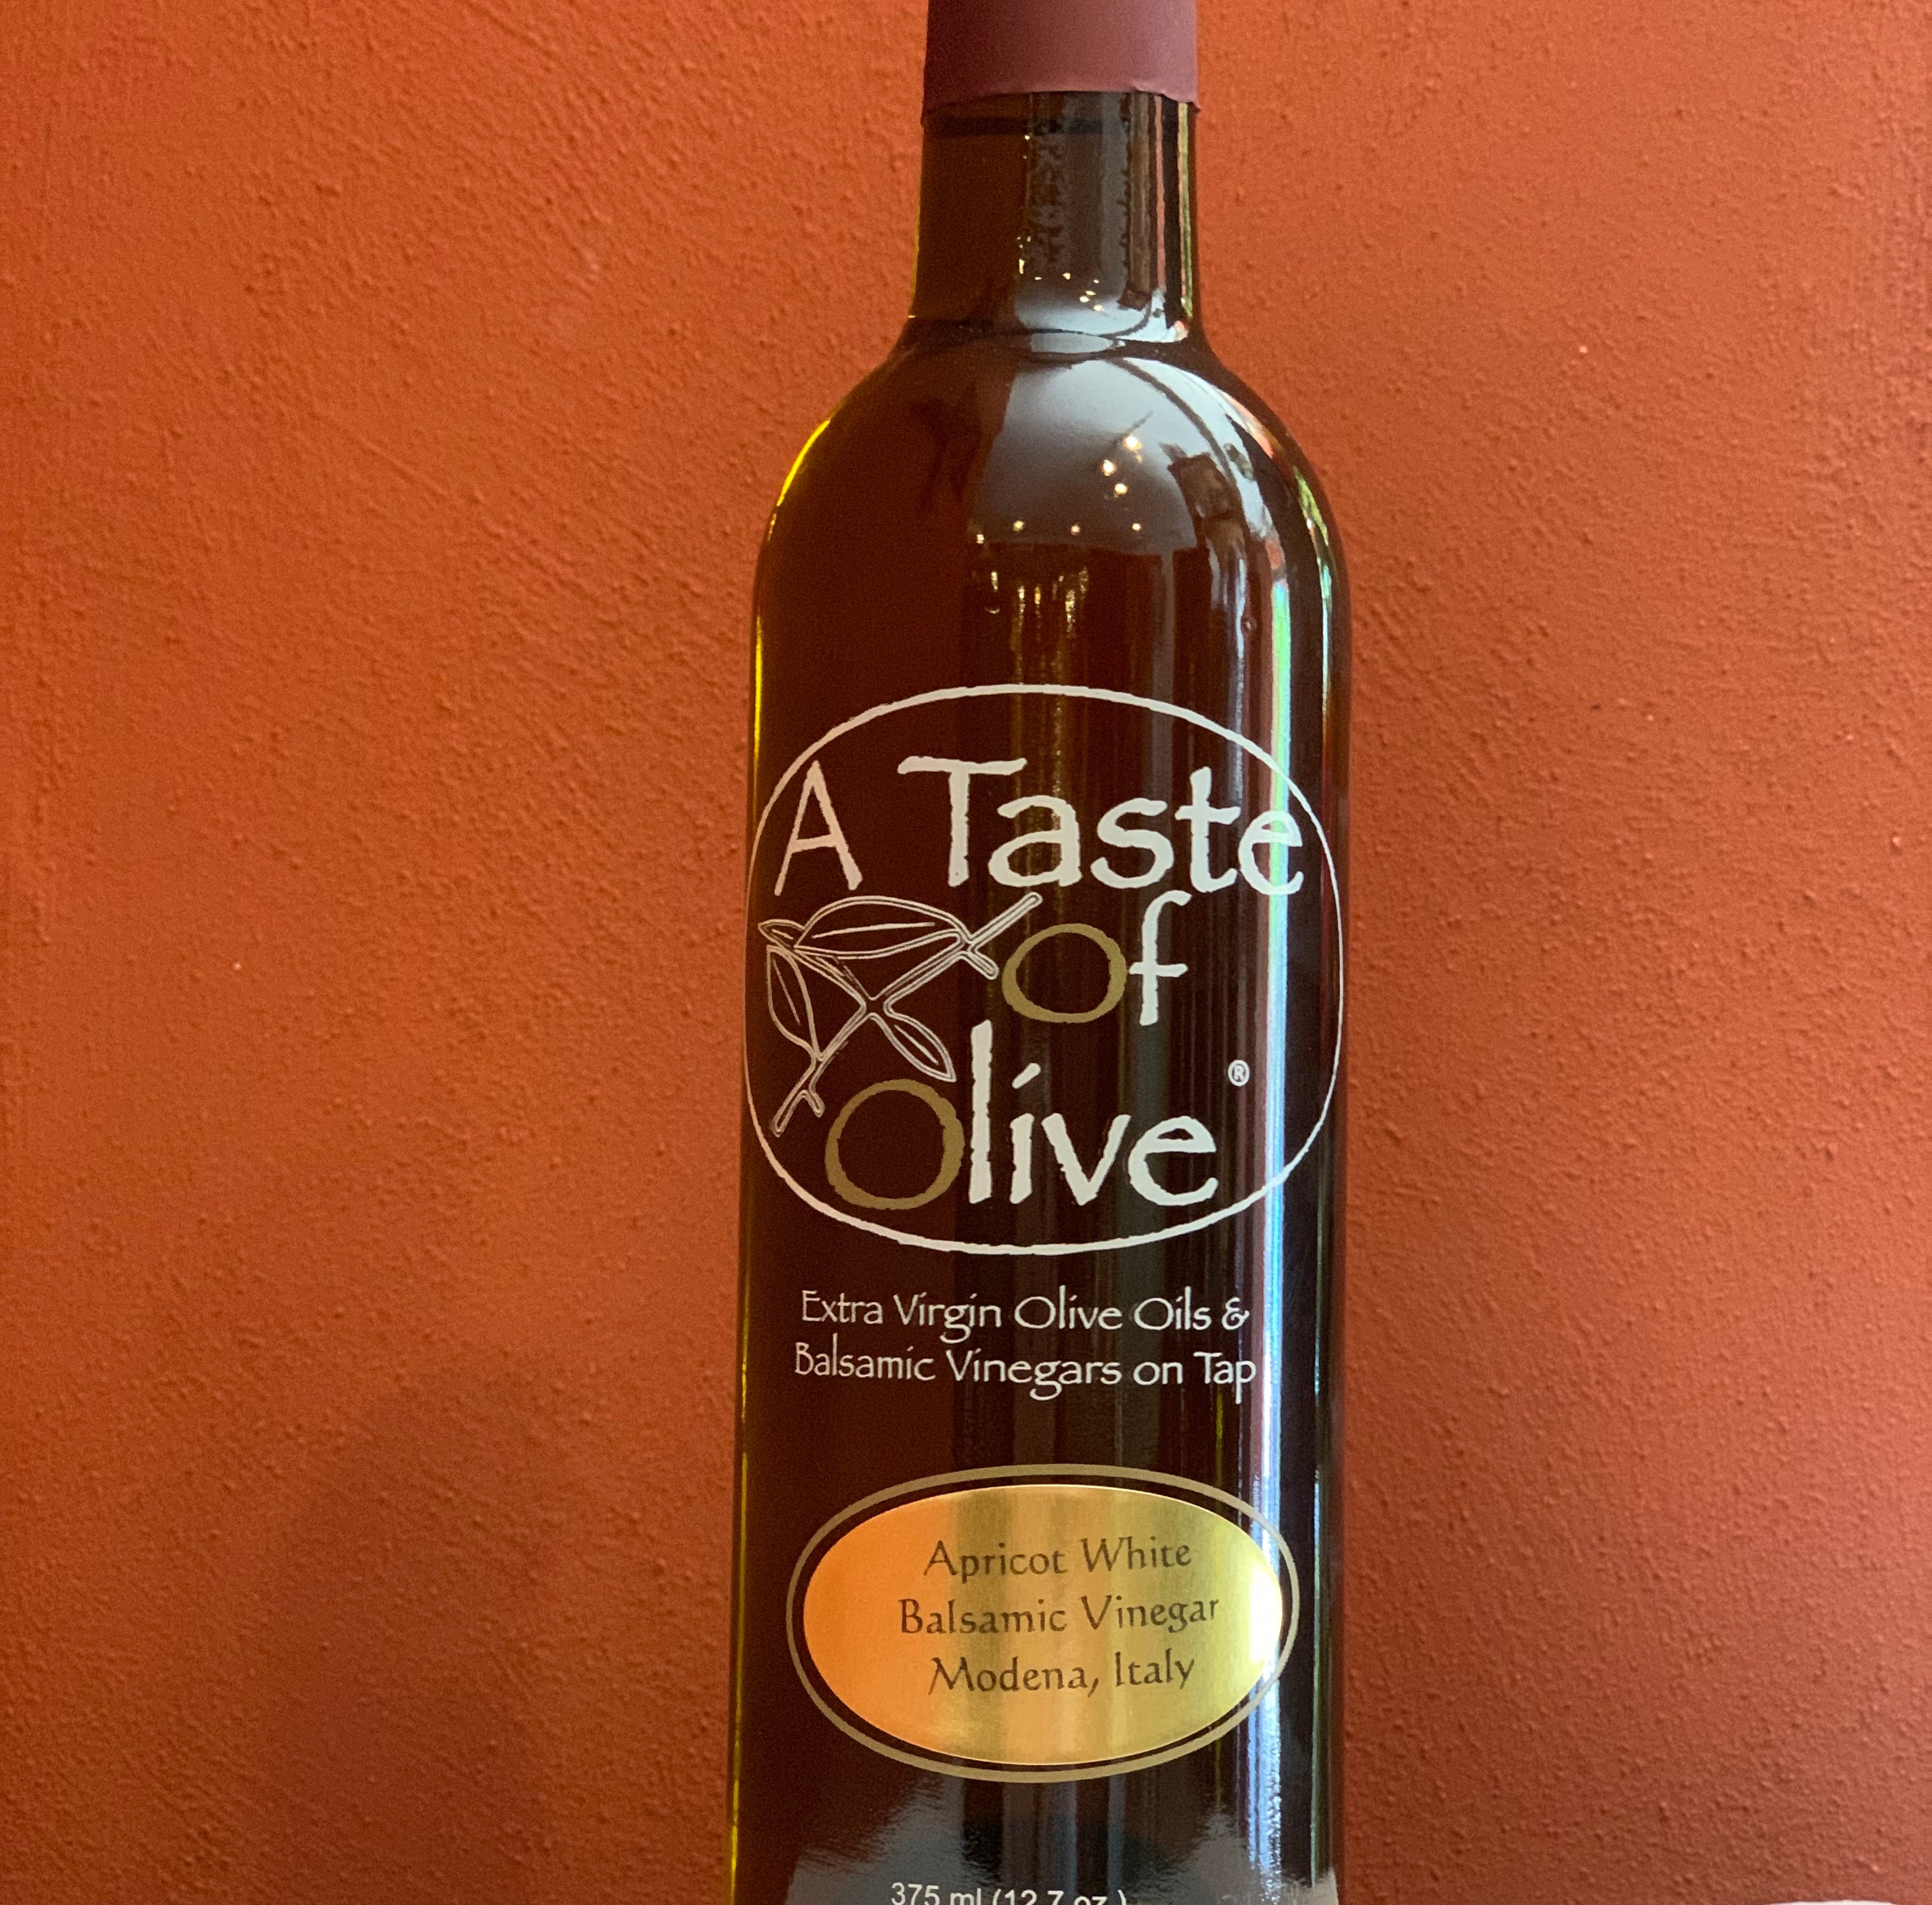 Apricot White Balsamic Vinegar - A Taste of Olive